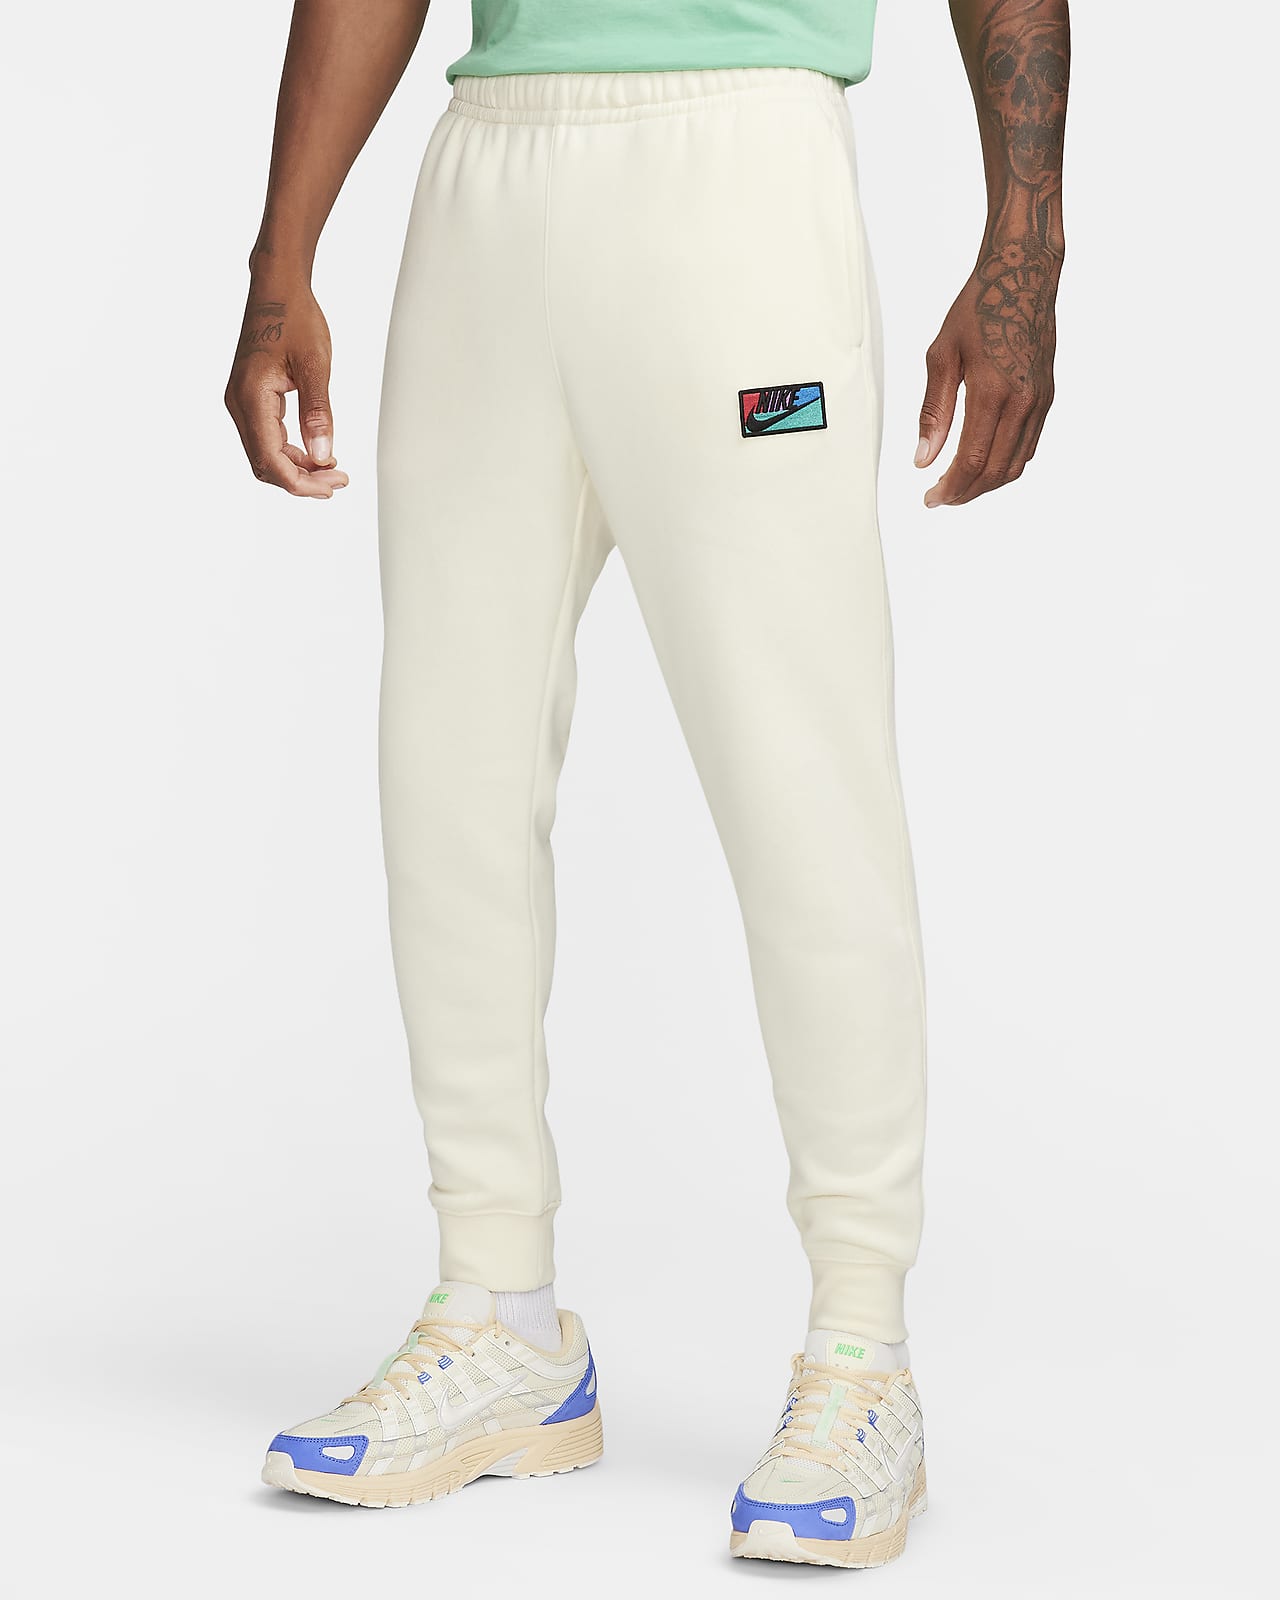 Tech Fleece Jogger Pants by Nike Online | THE ICONIC | Australia